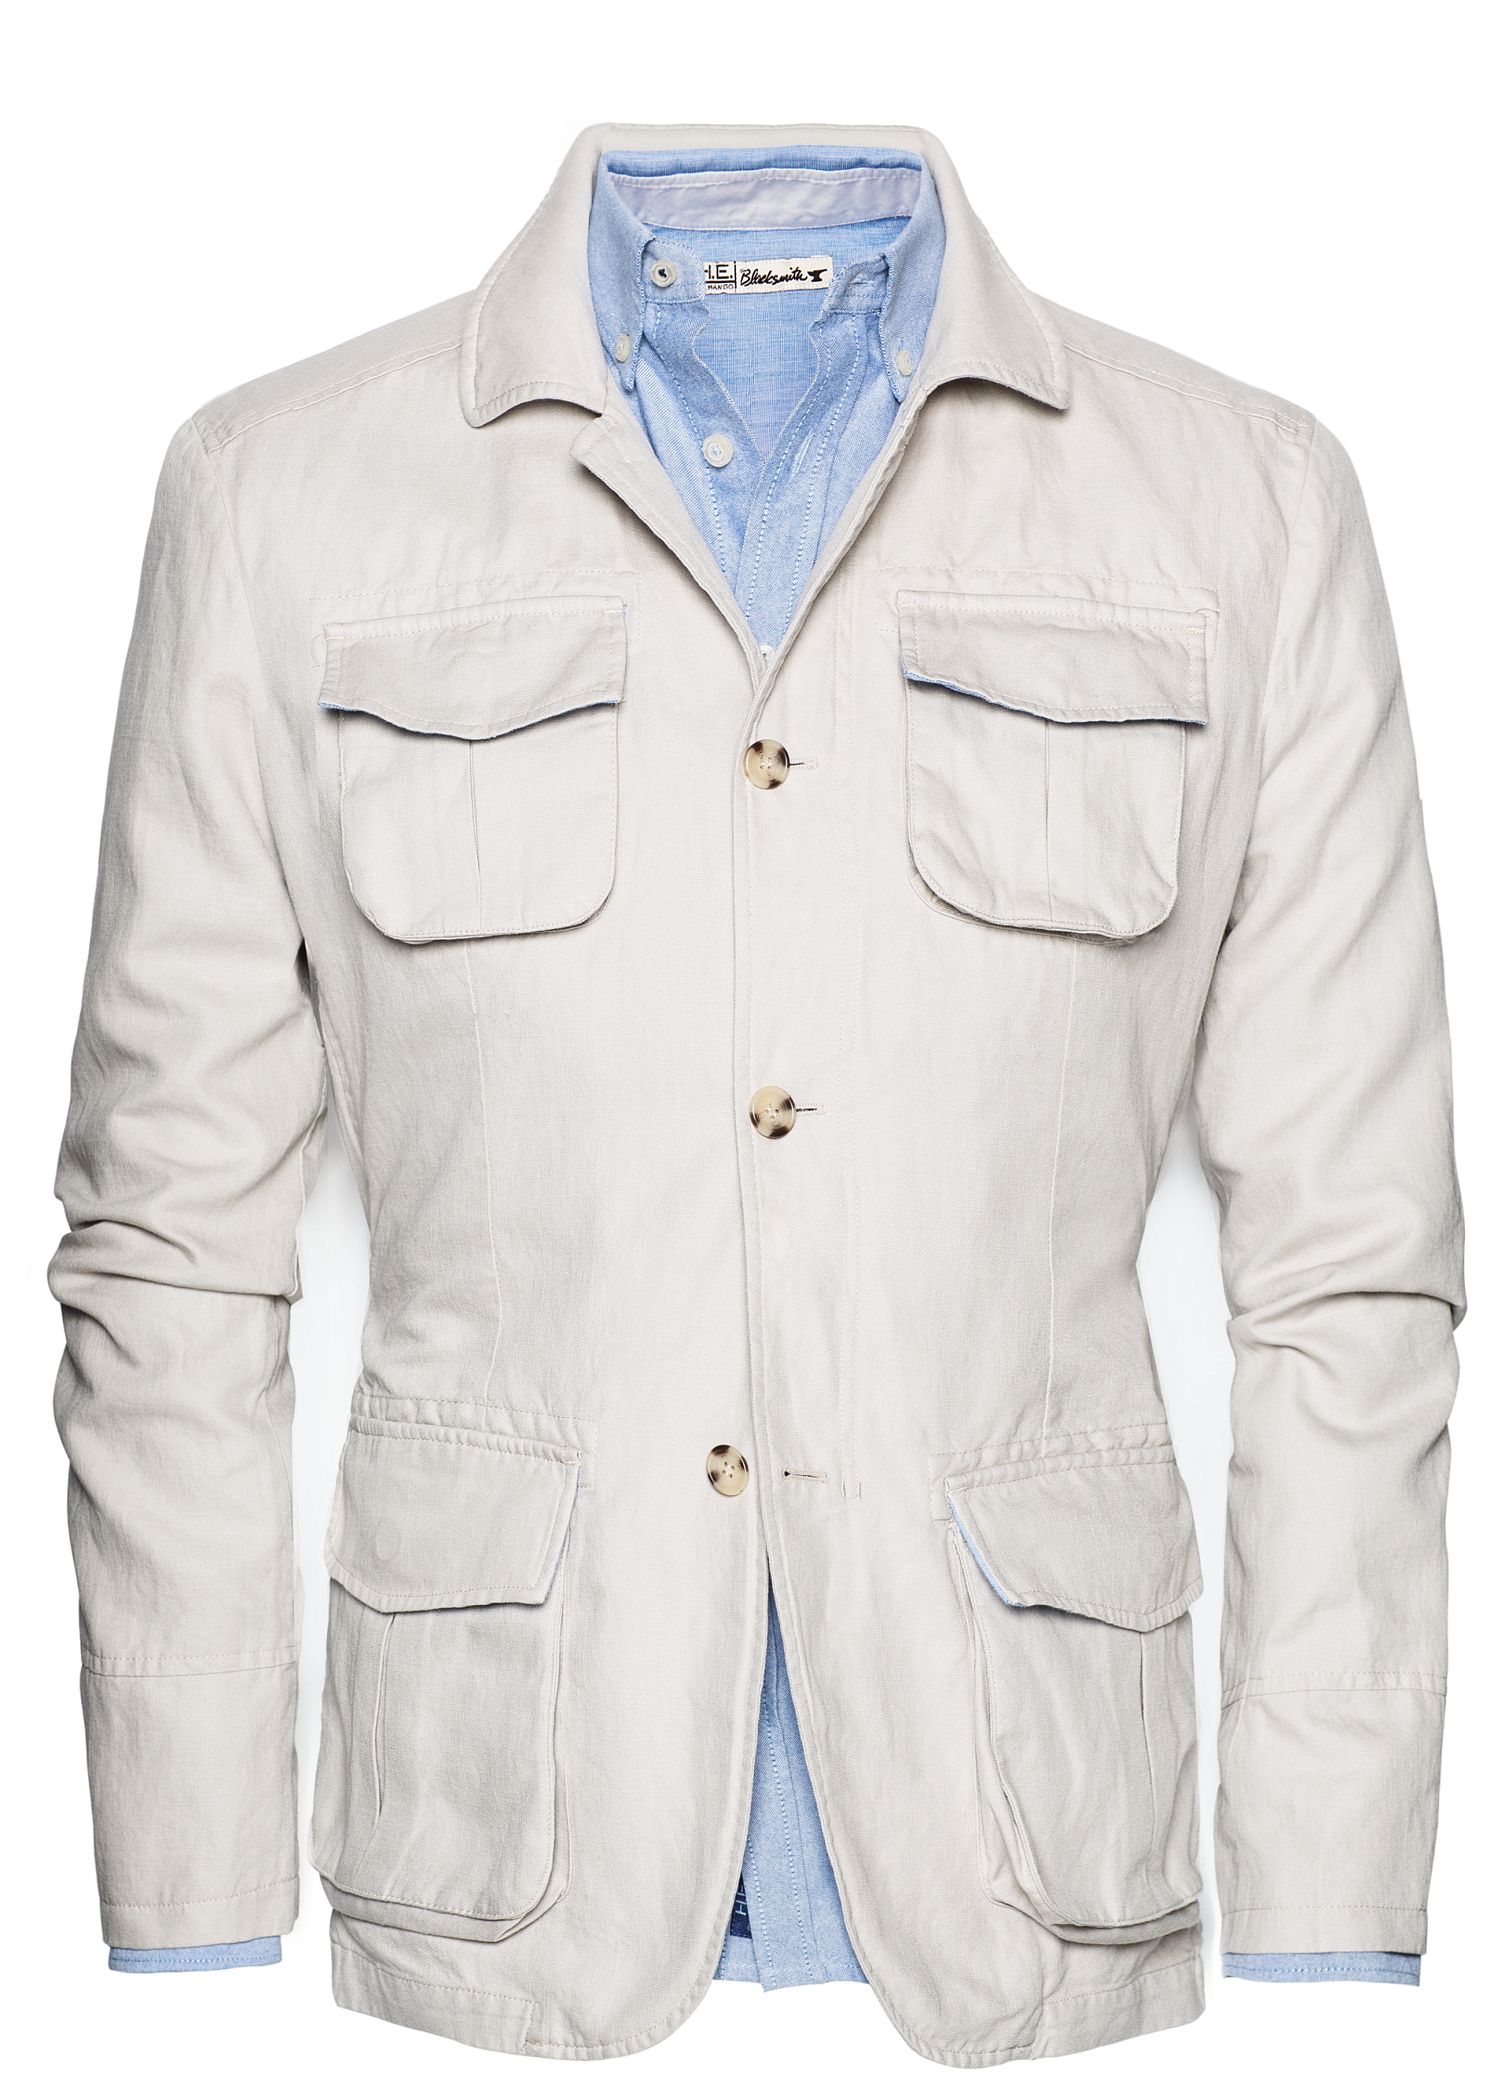 Lyst - Mango Linen Cottonblend Safari Jacket in Gray for Men